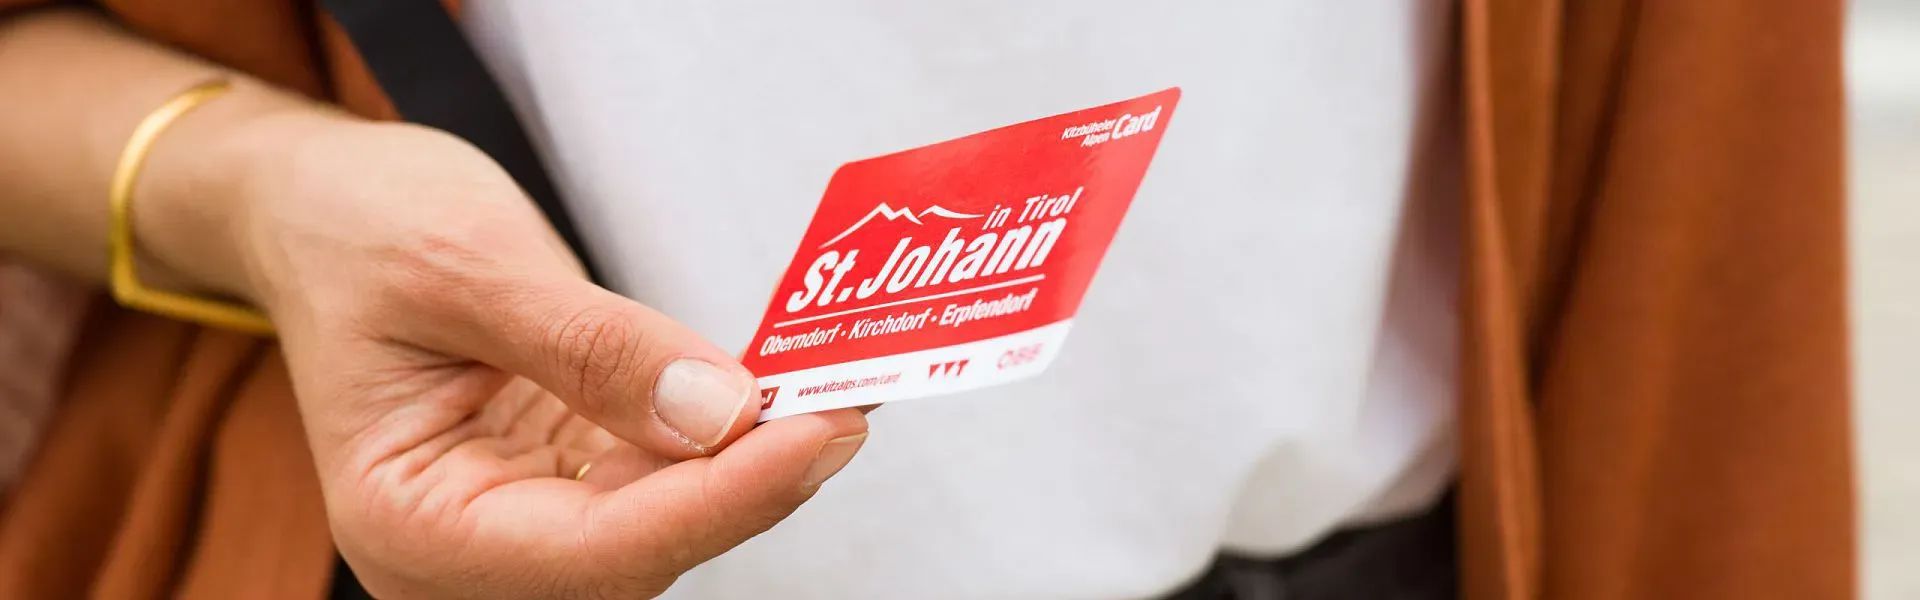 St. Johann Card Gästekarte - Region St. Johann in Tirol